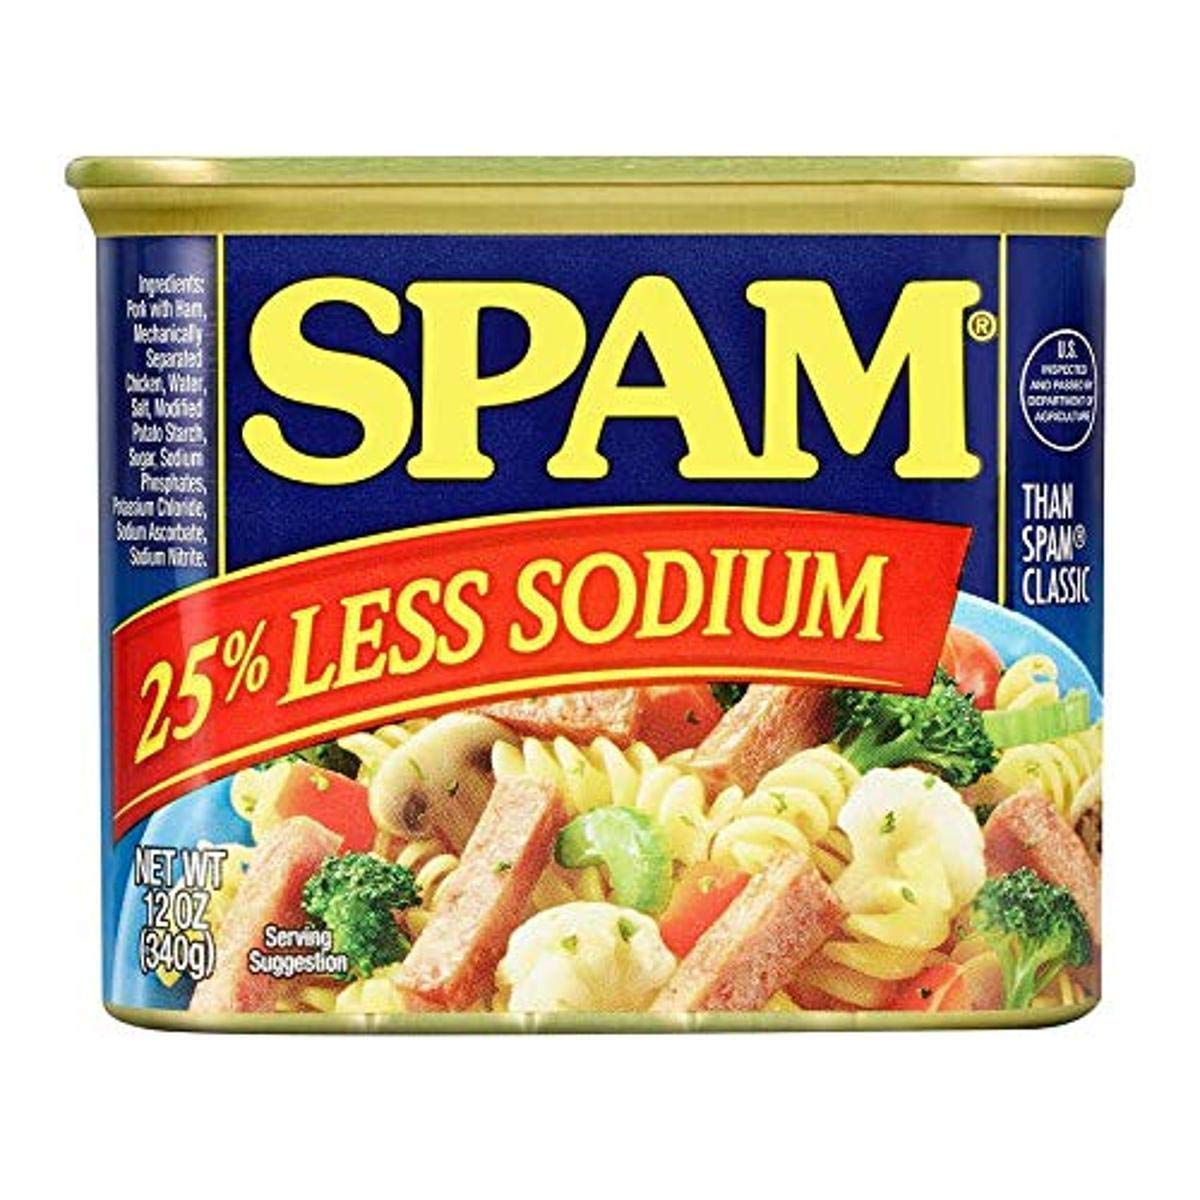 SPAM Less Sodium, 12 Oz (Pack Of 12) - $30.02 at Amazon